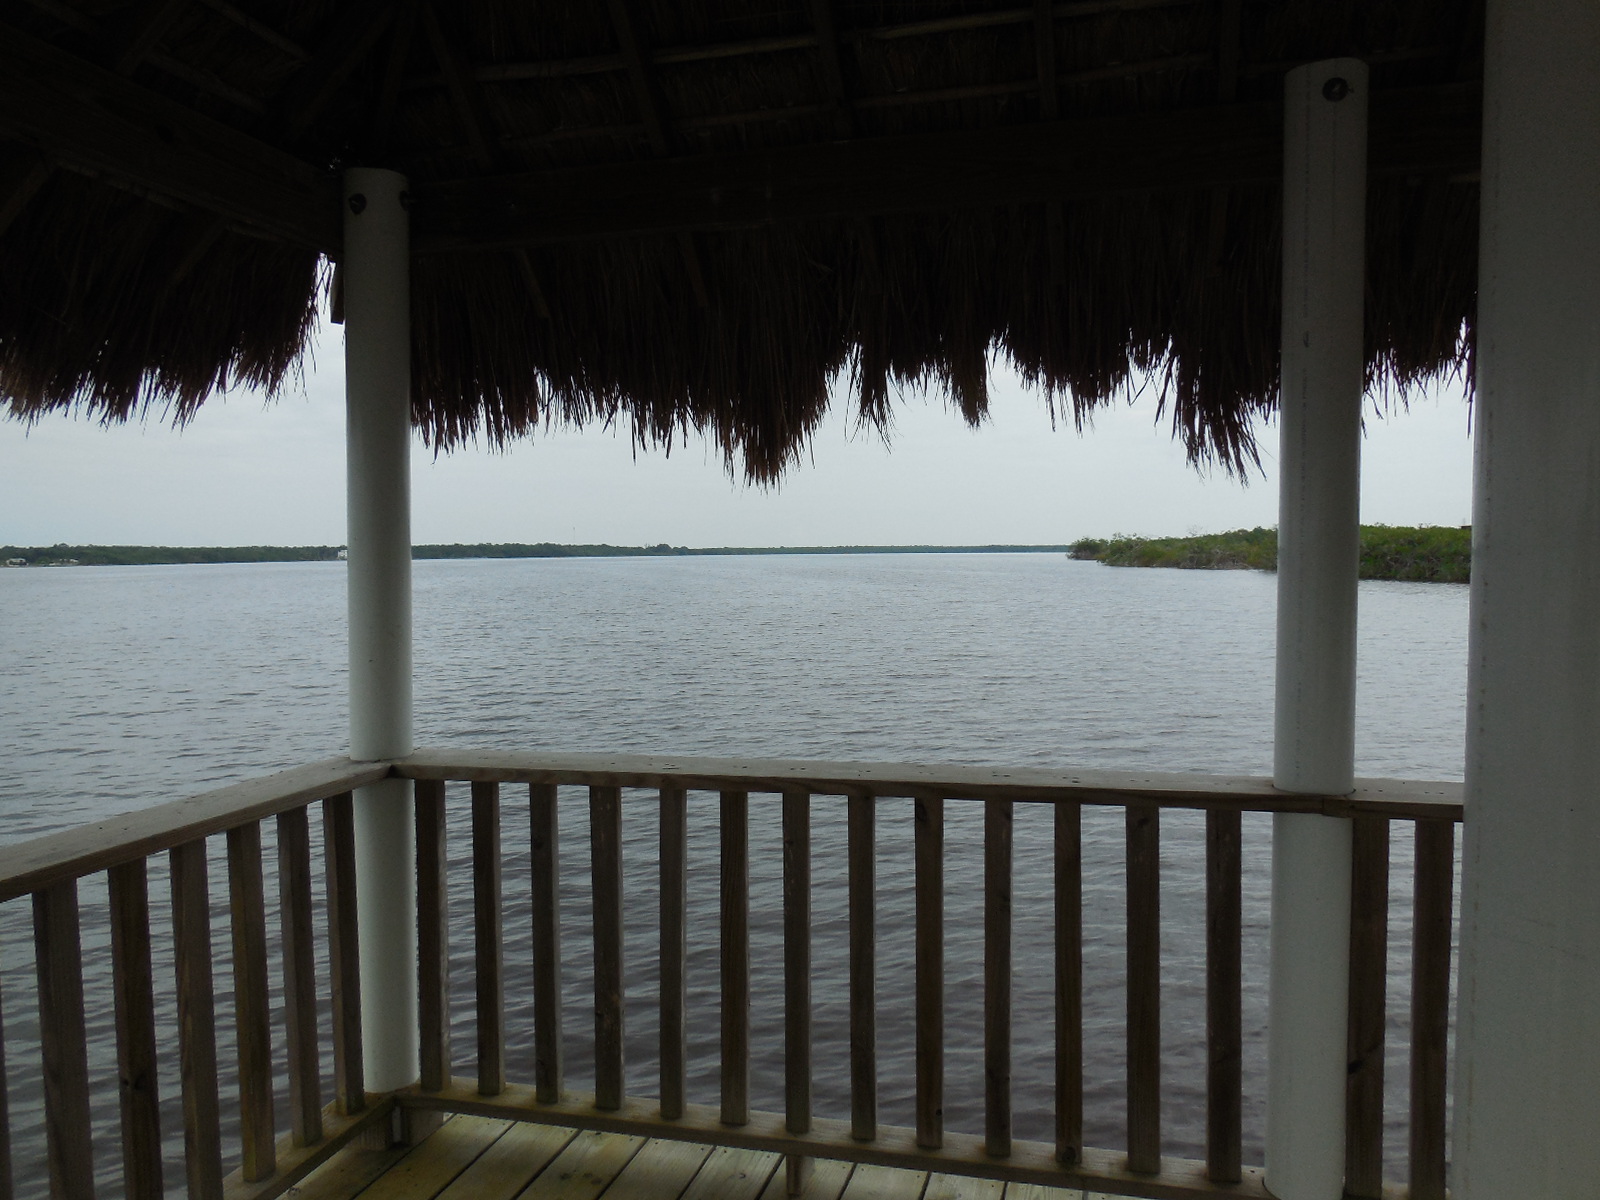 Sunset Villas, a Belize Waterfront Community